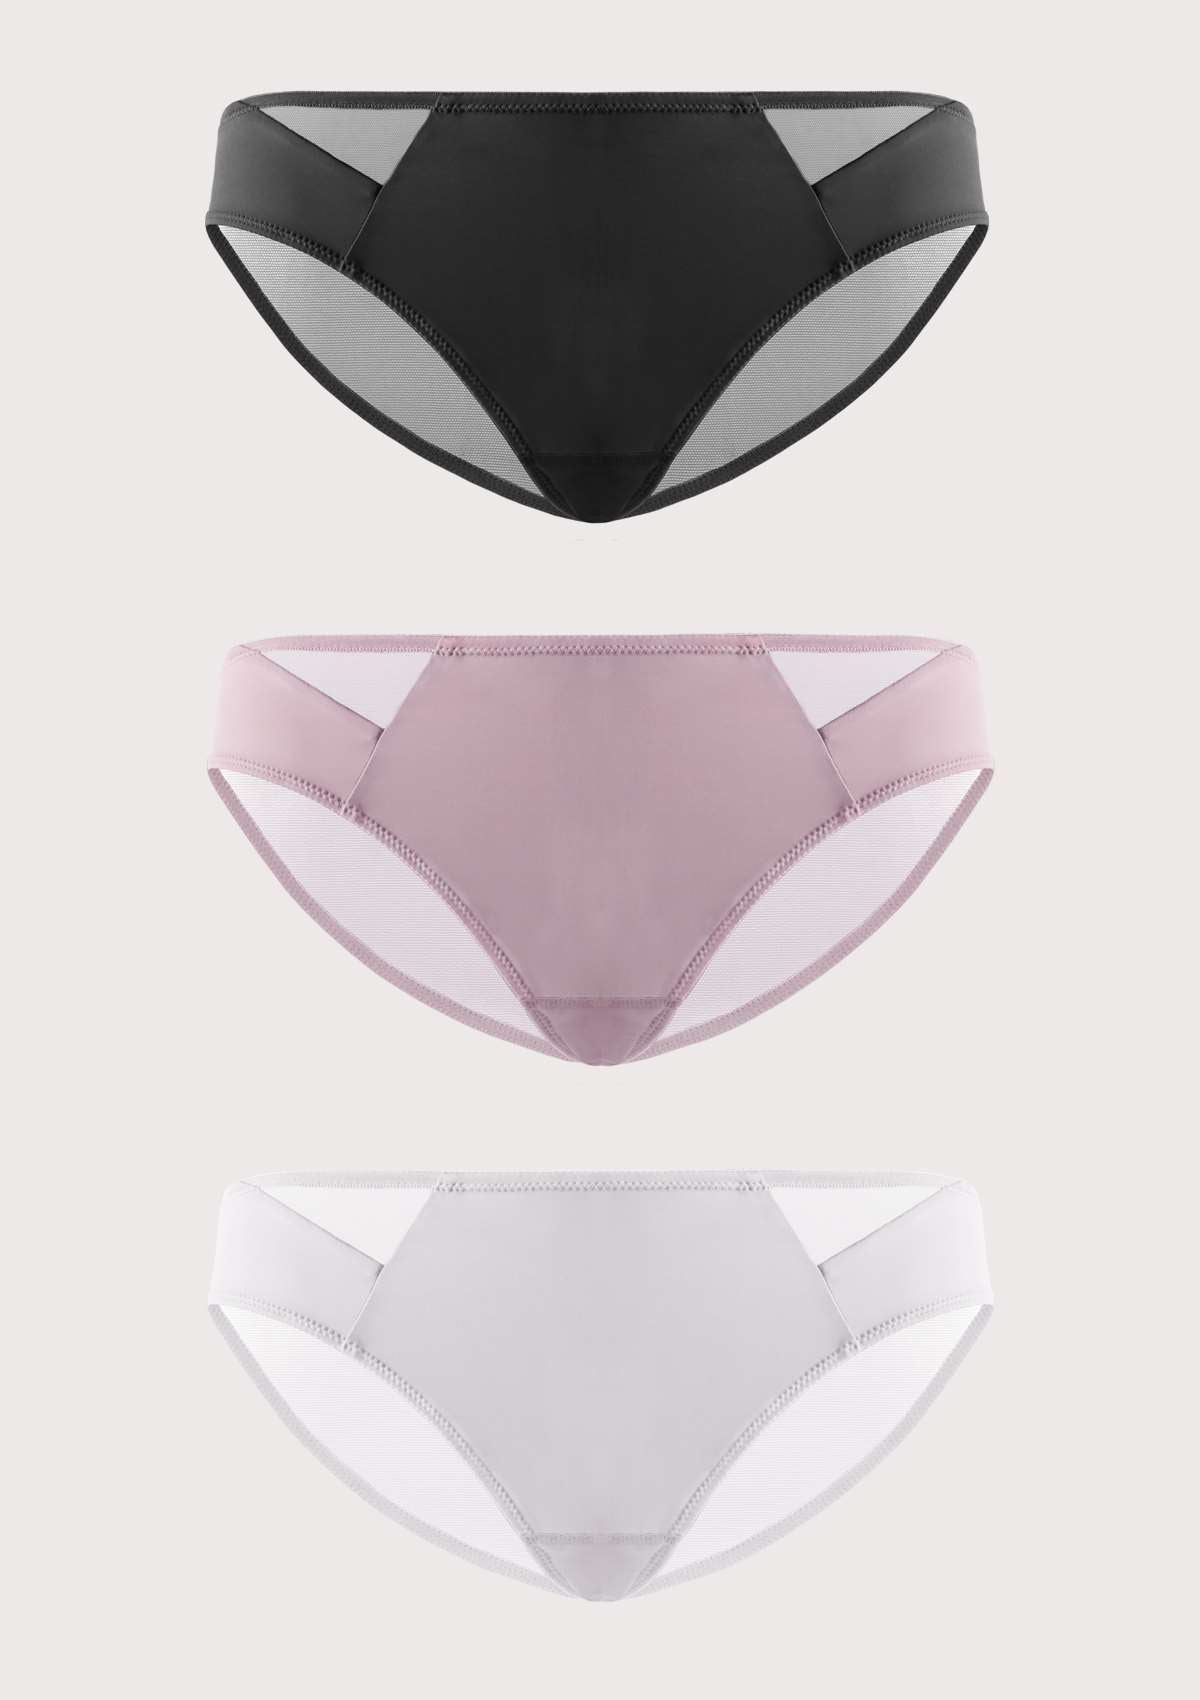 HSIA Geometric Breathable Soft Everyday Bikini Panties 3 Pack - L / Black+Purple+Pink